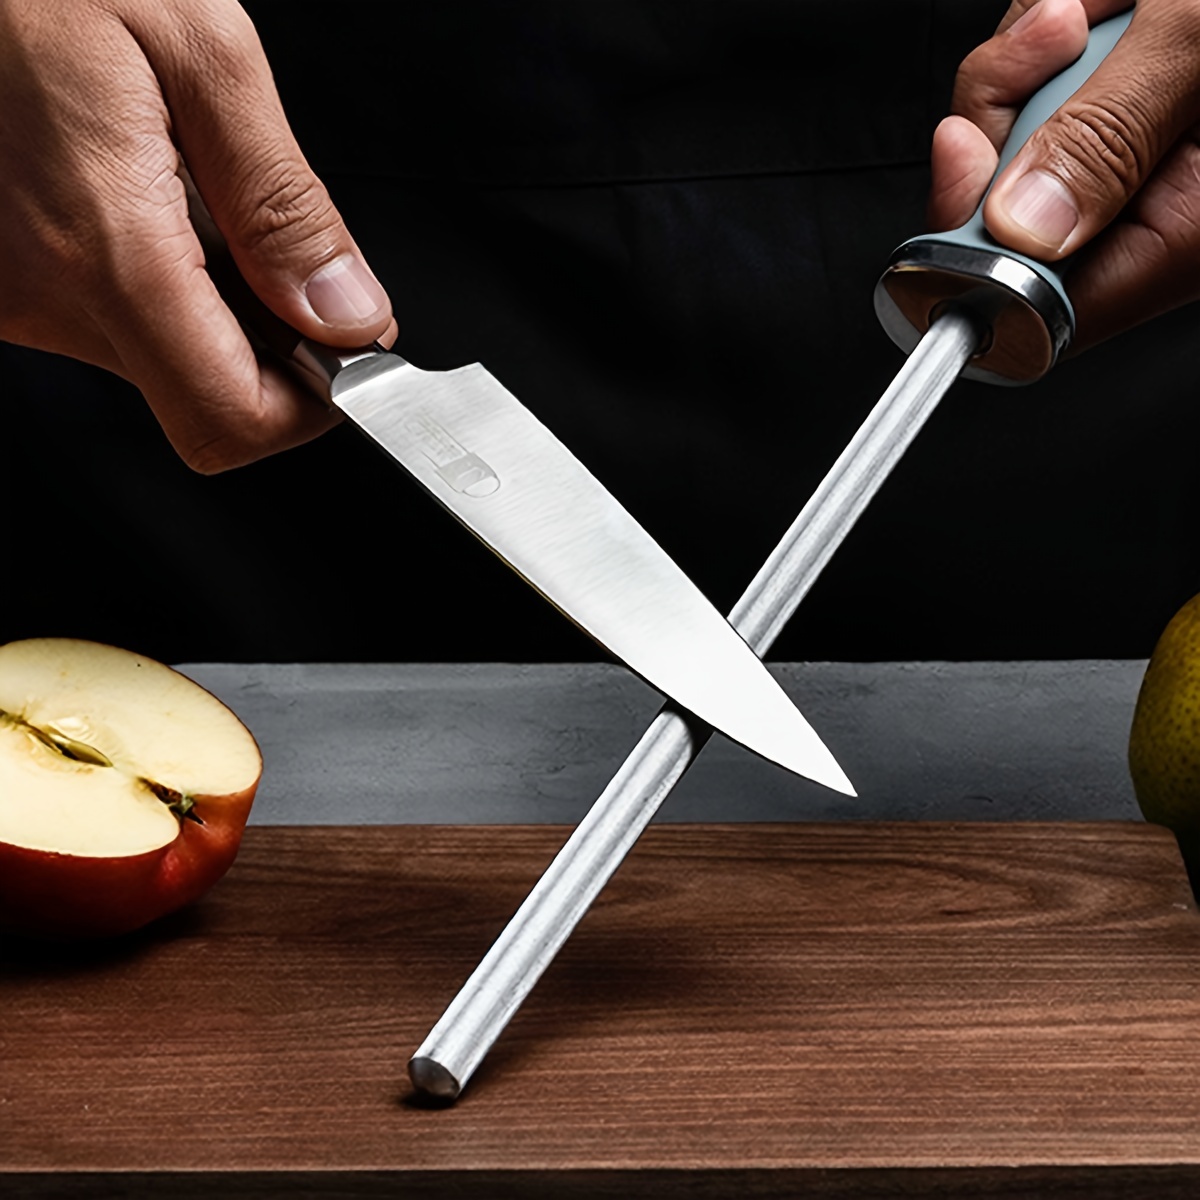 Afilador cuchillos profesional chef master CHEF MASTER